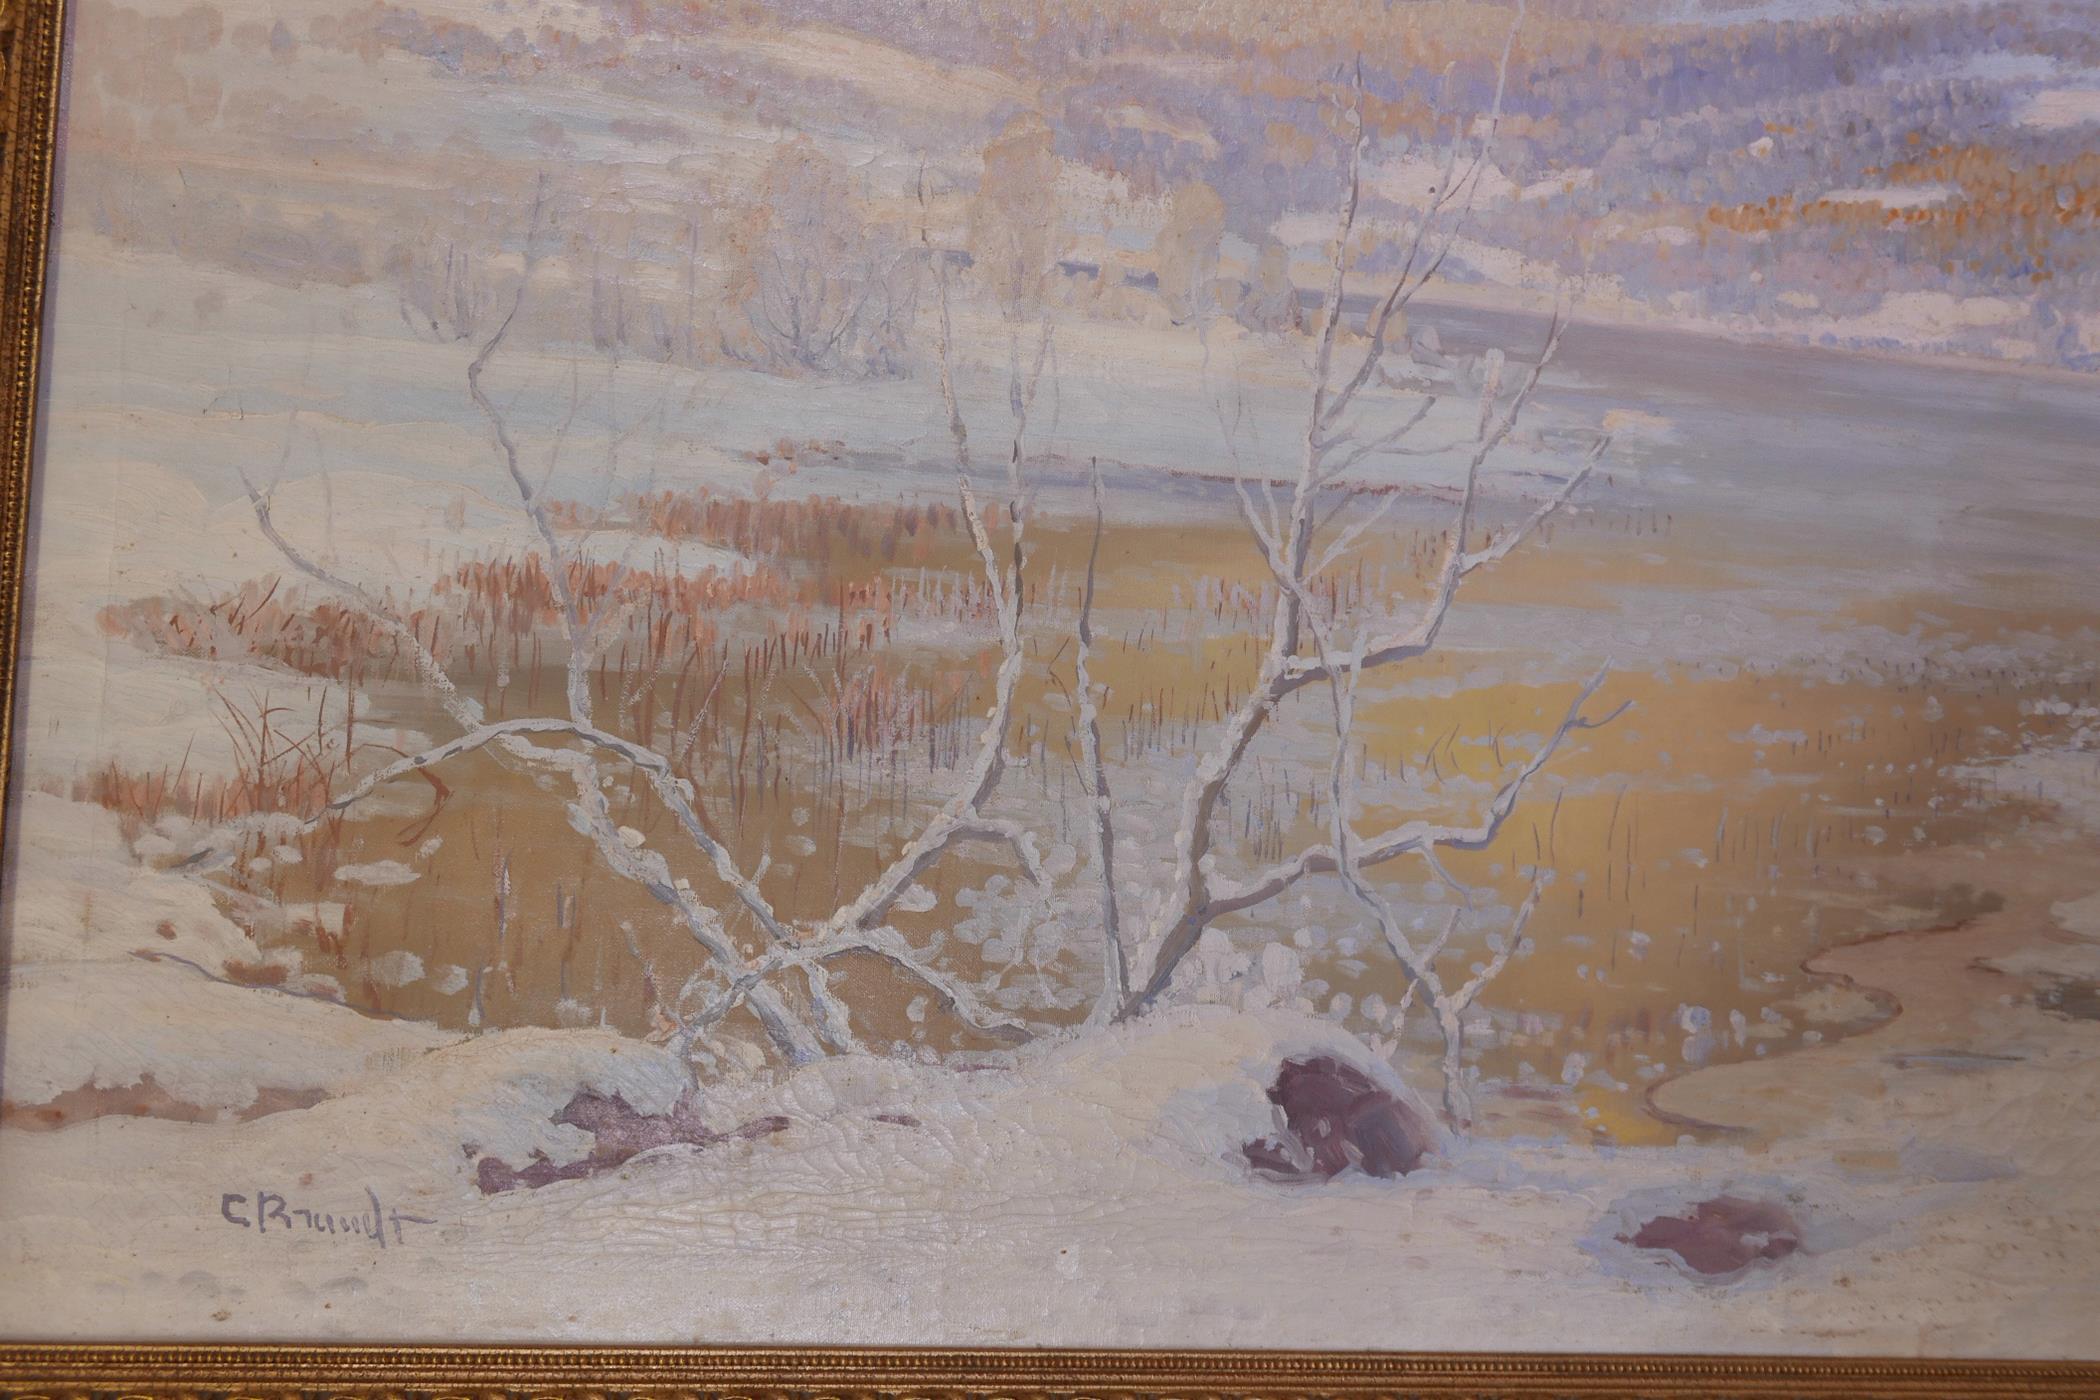 C. (Carl) Rundt, bleak winter fjord scene, signed, oil on canvas, 49" x 35" - Image 3 of 4